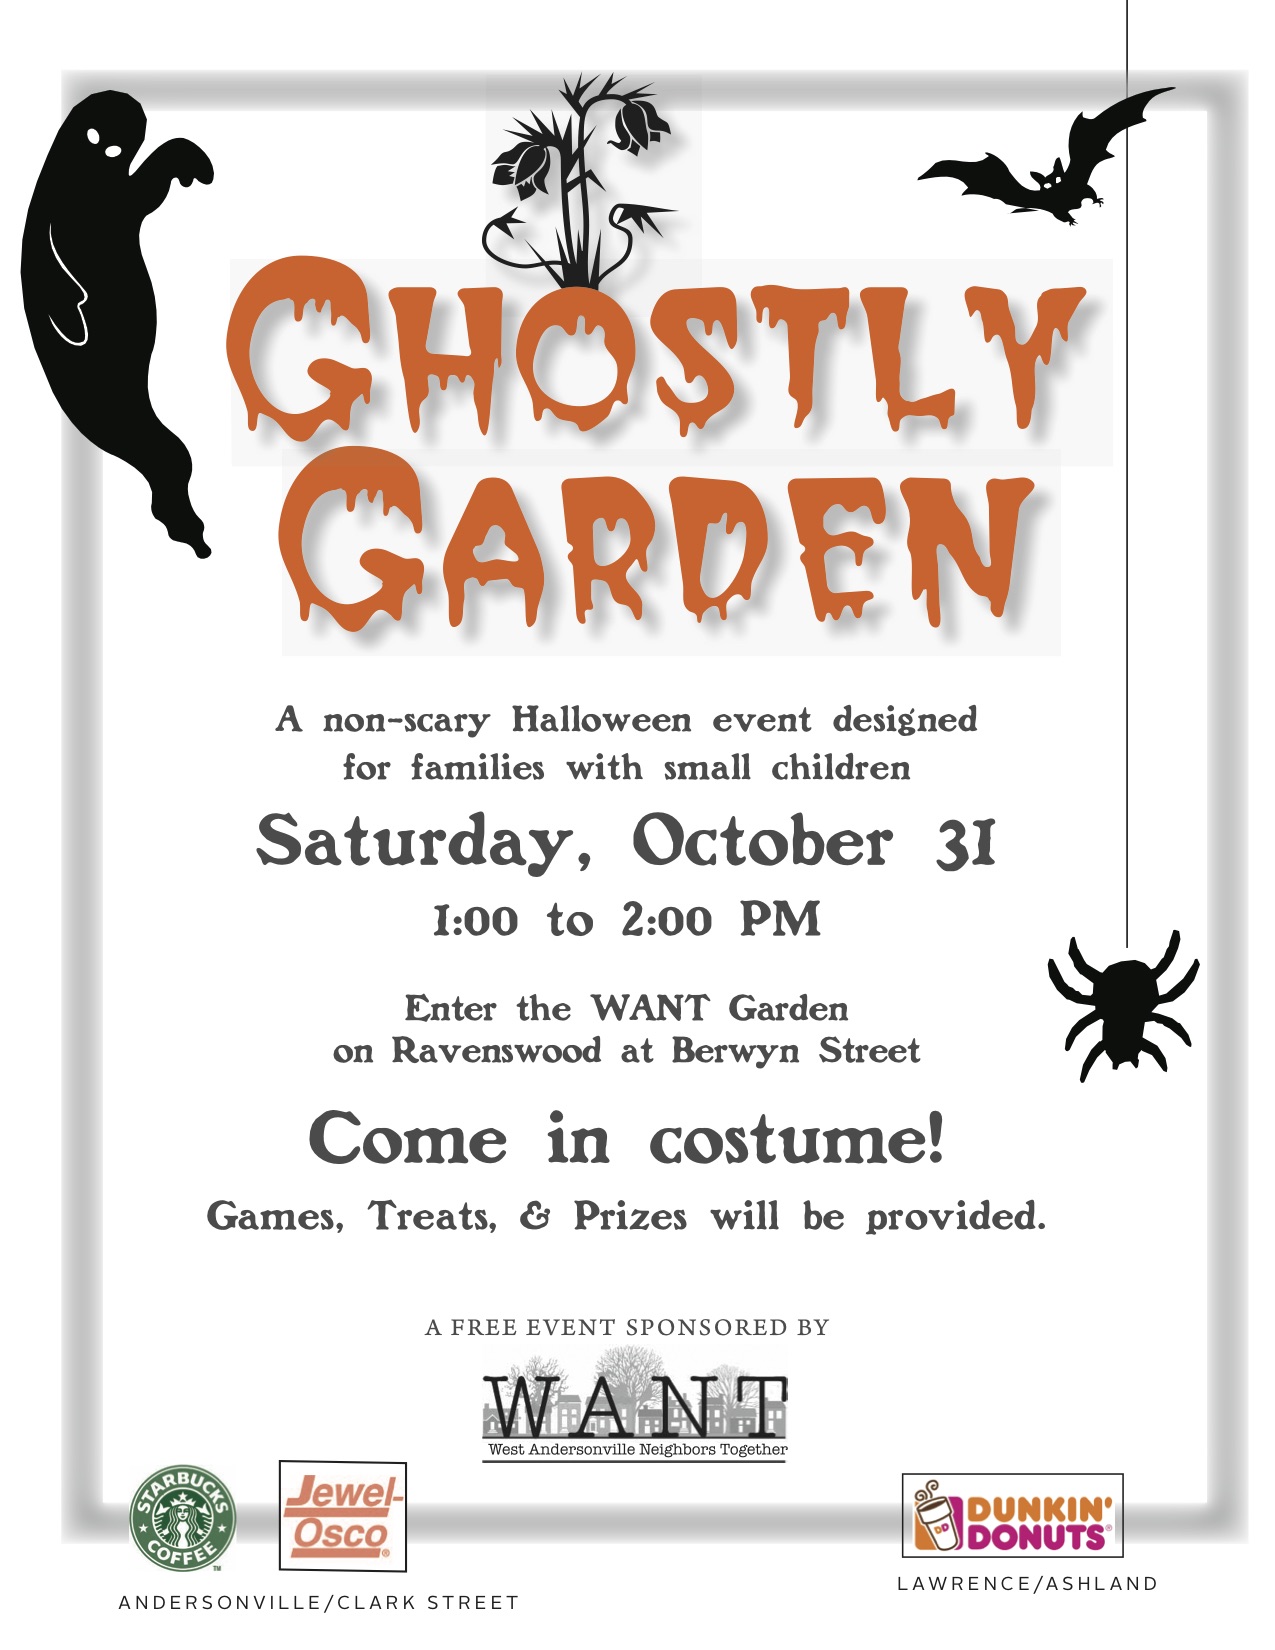 Ghostly Garden Flyer outlines